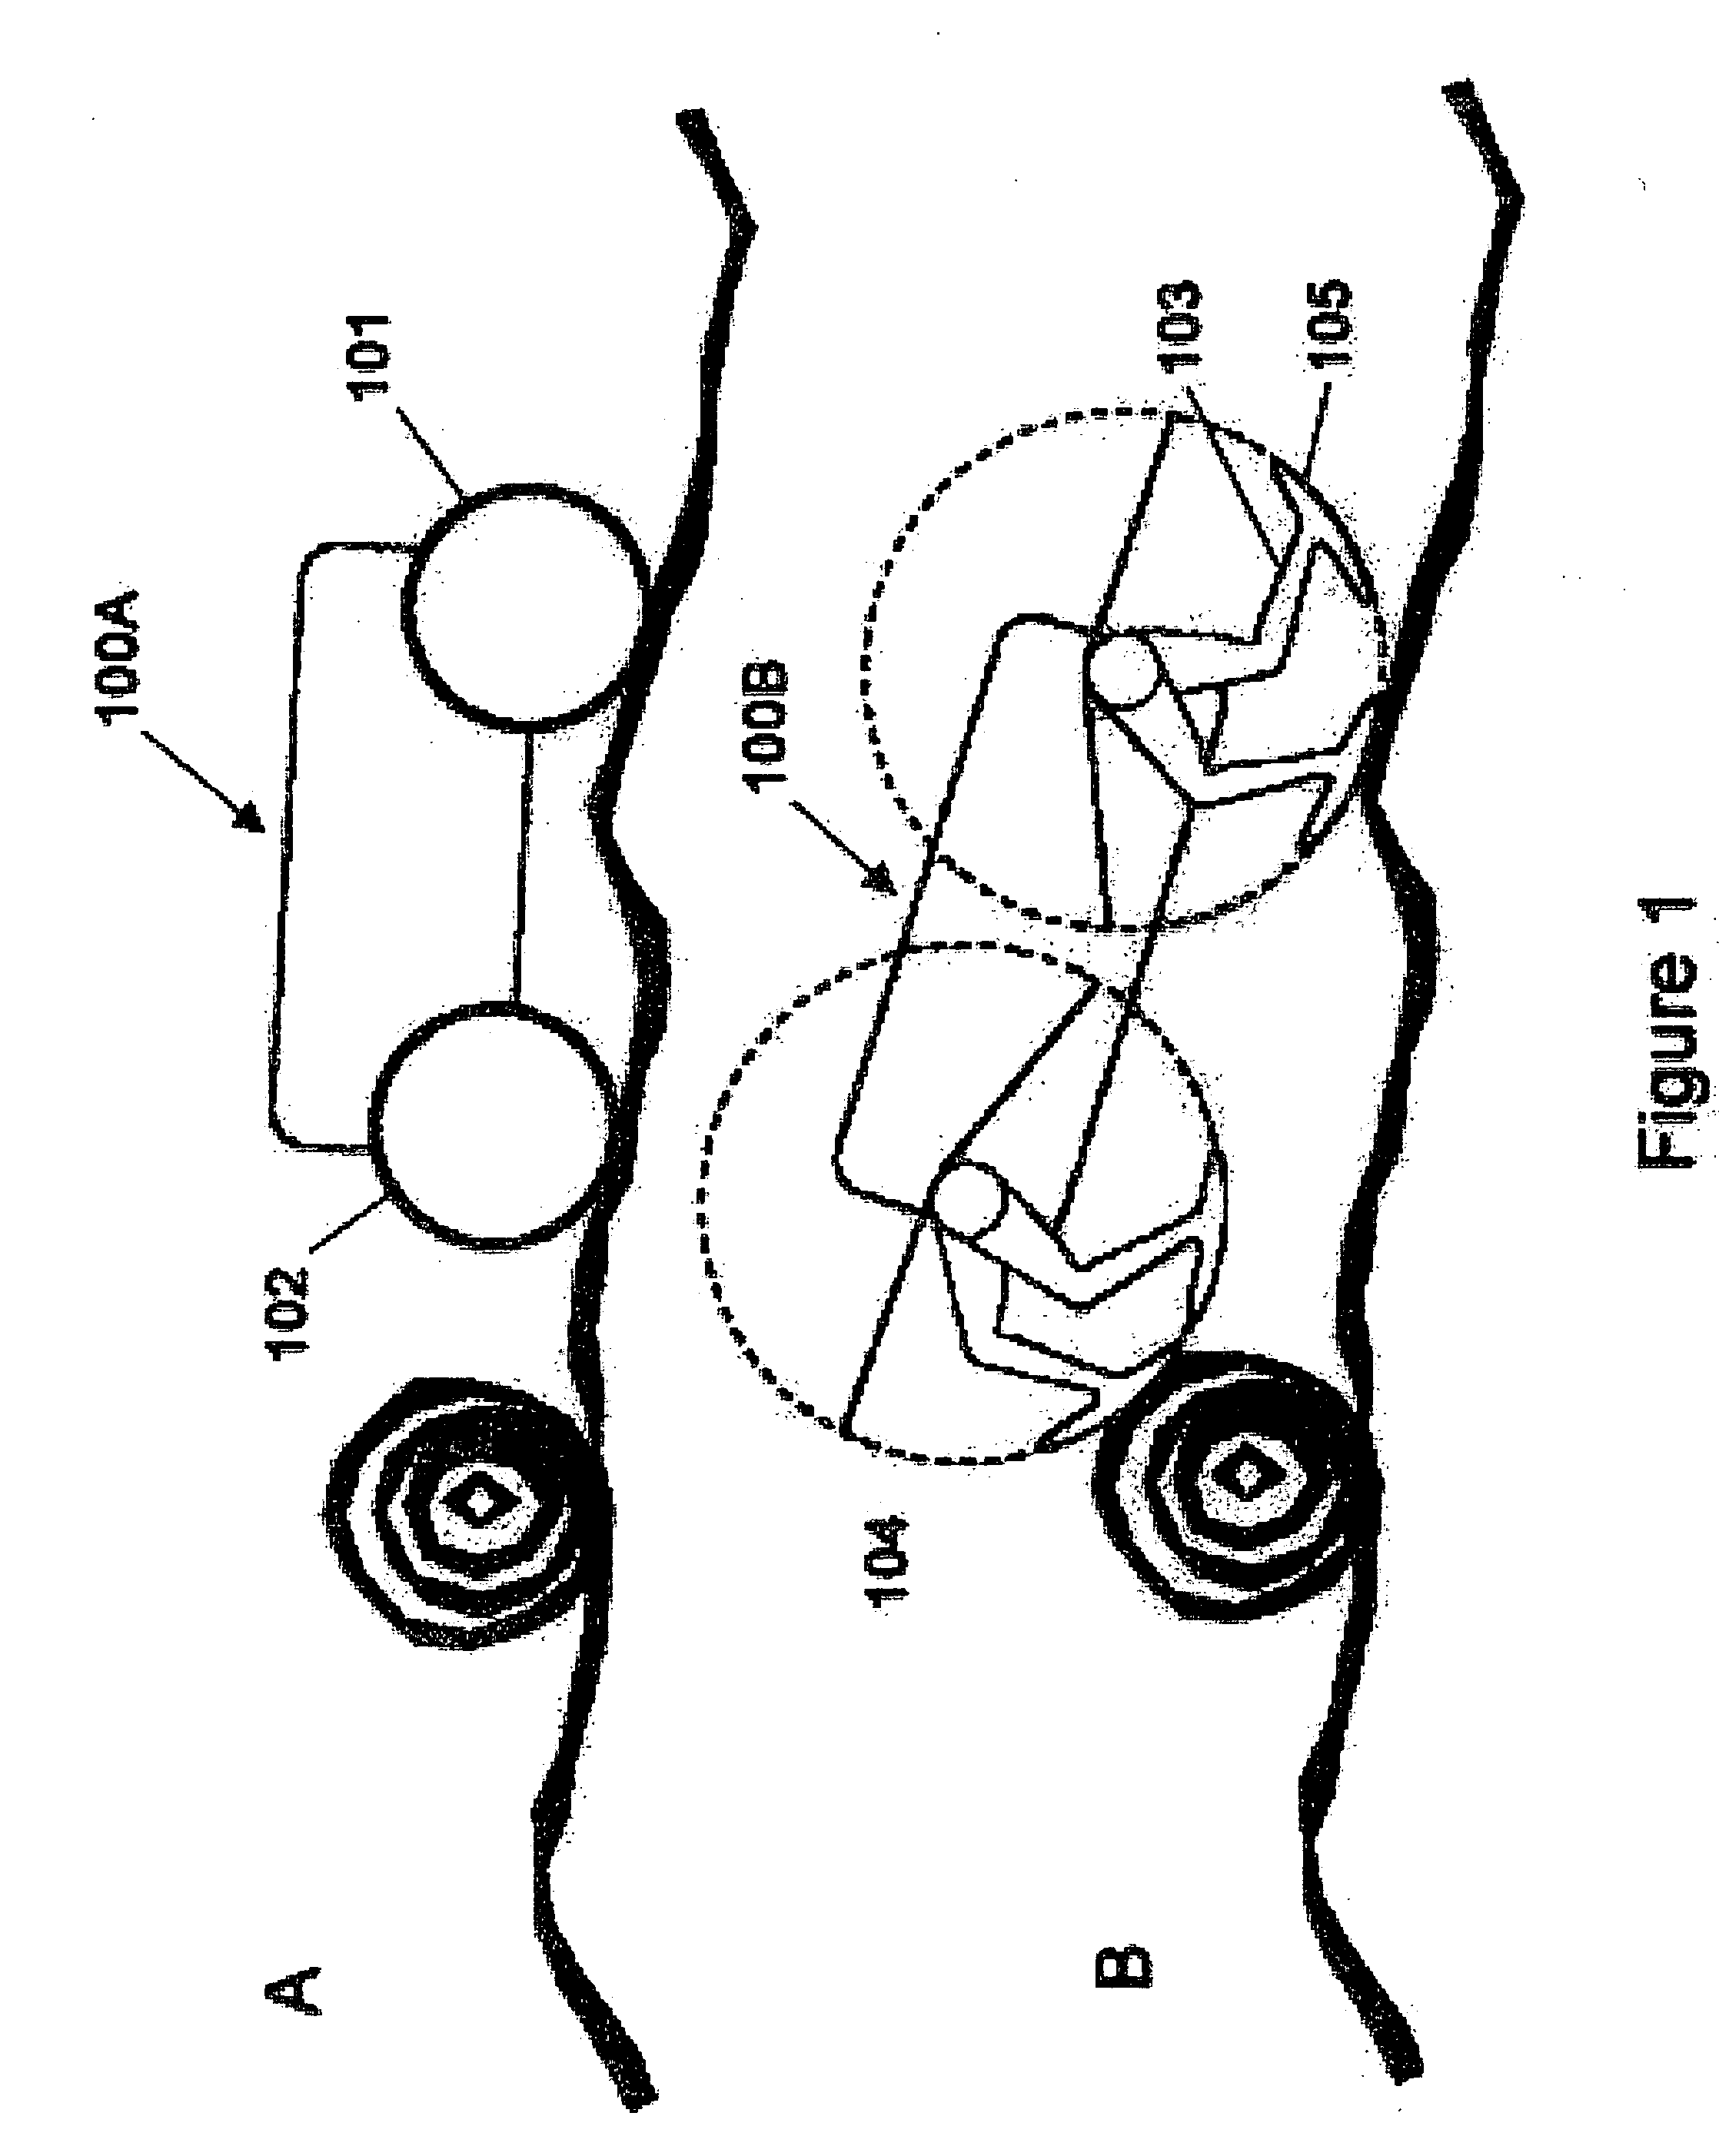 Bimodal conveyance mechanism